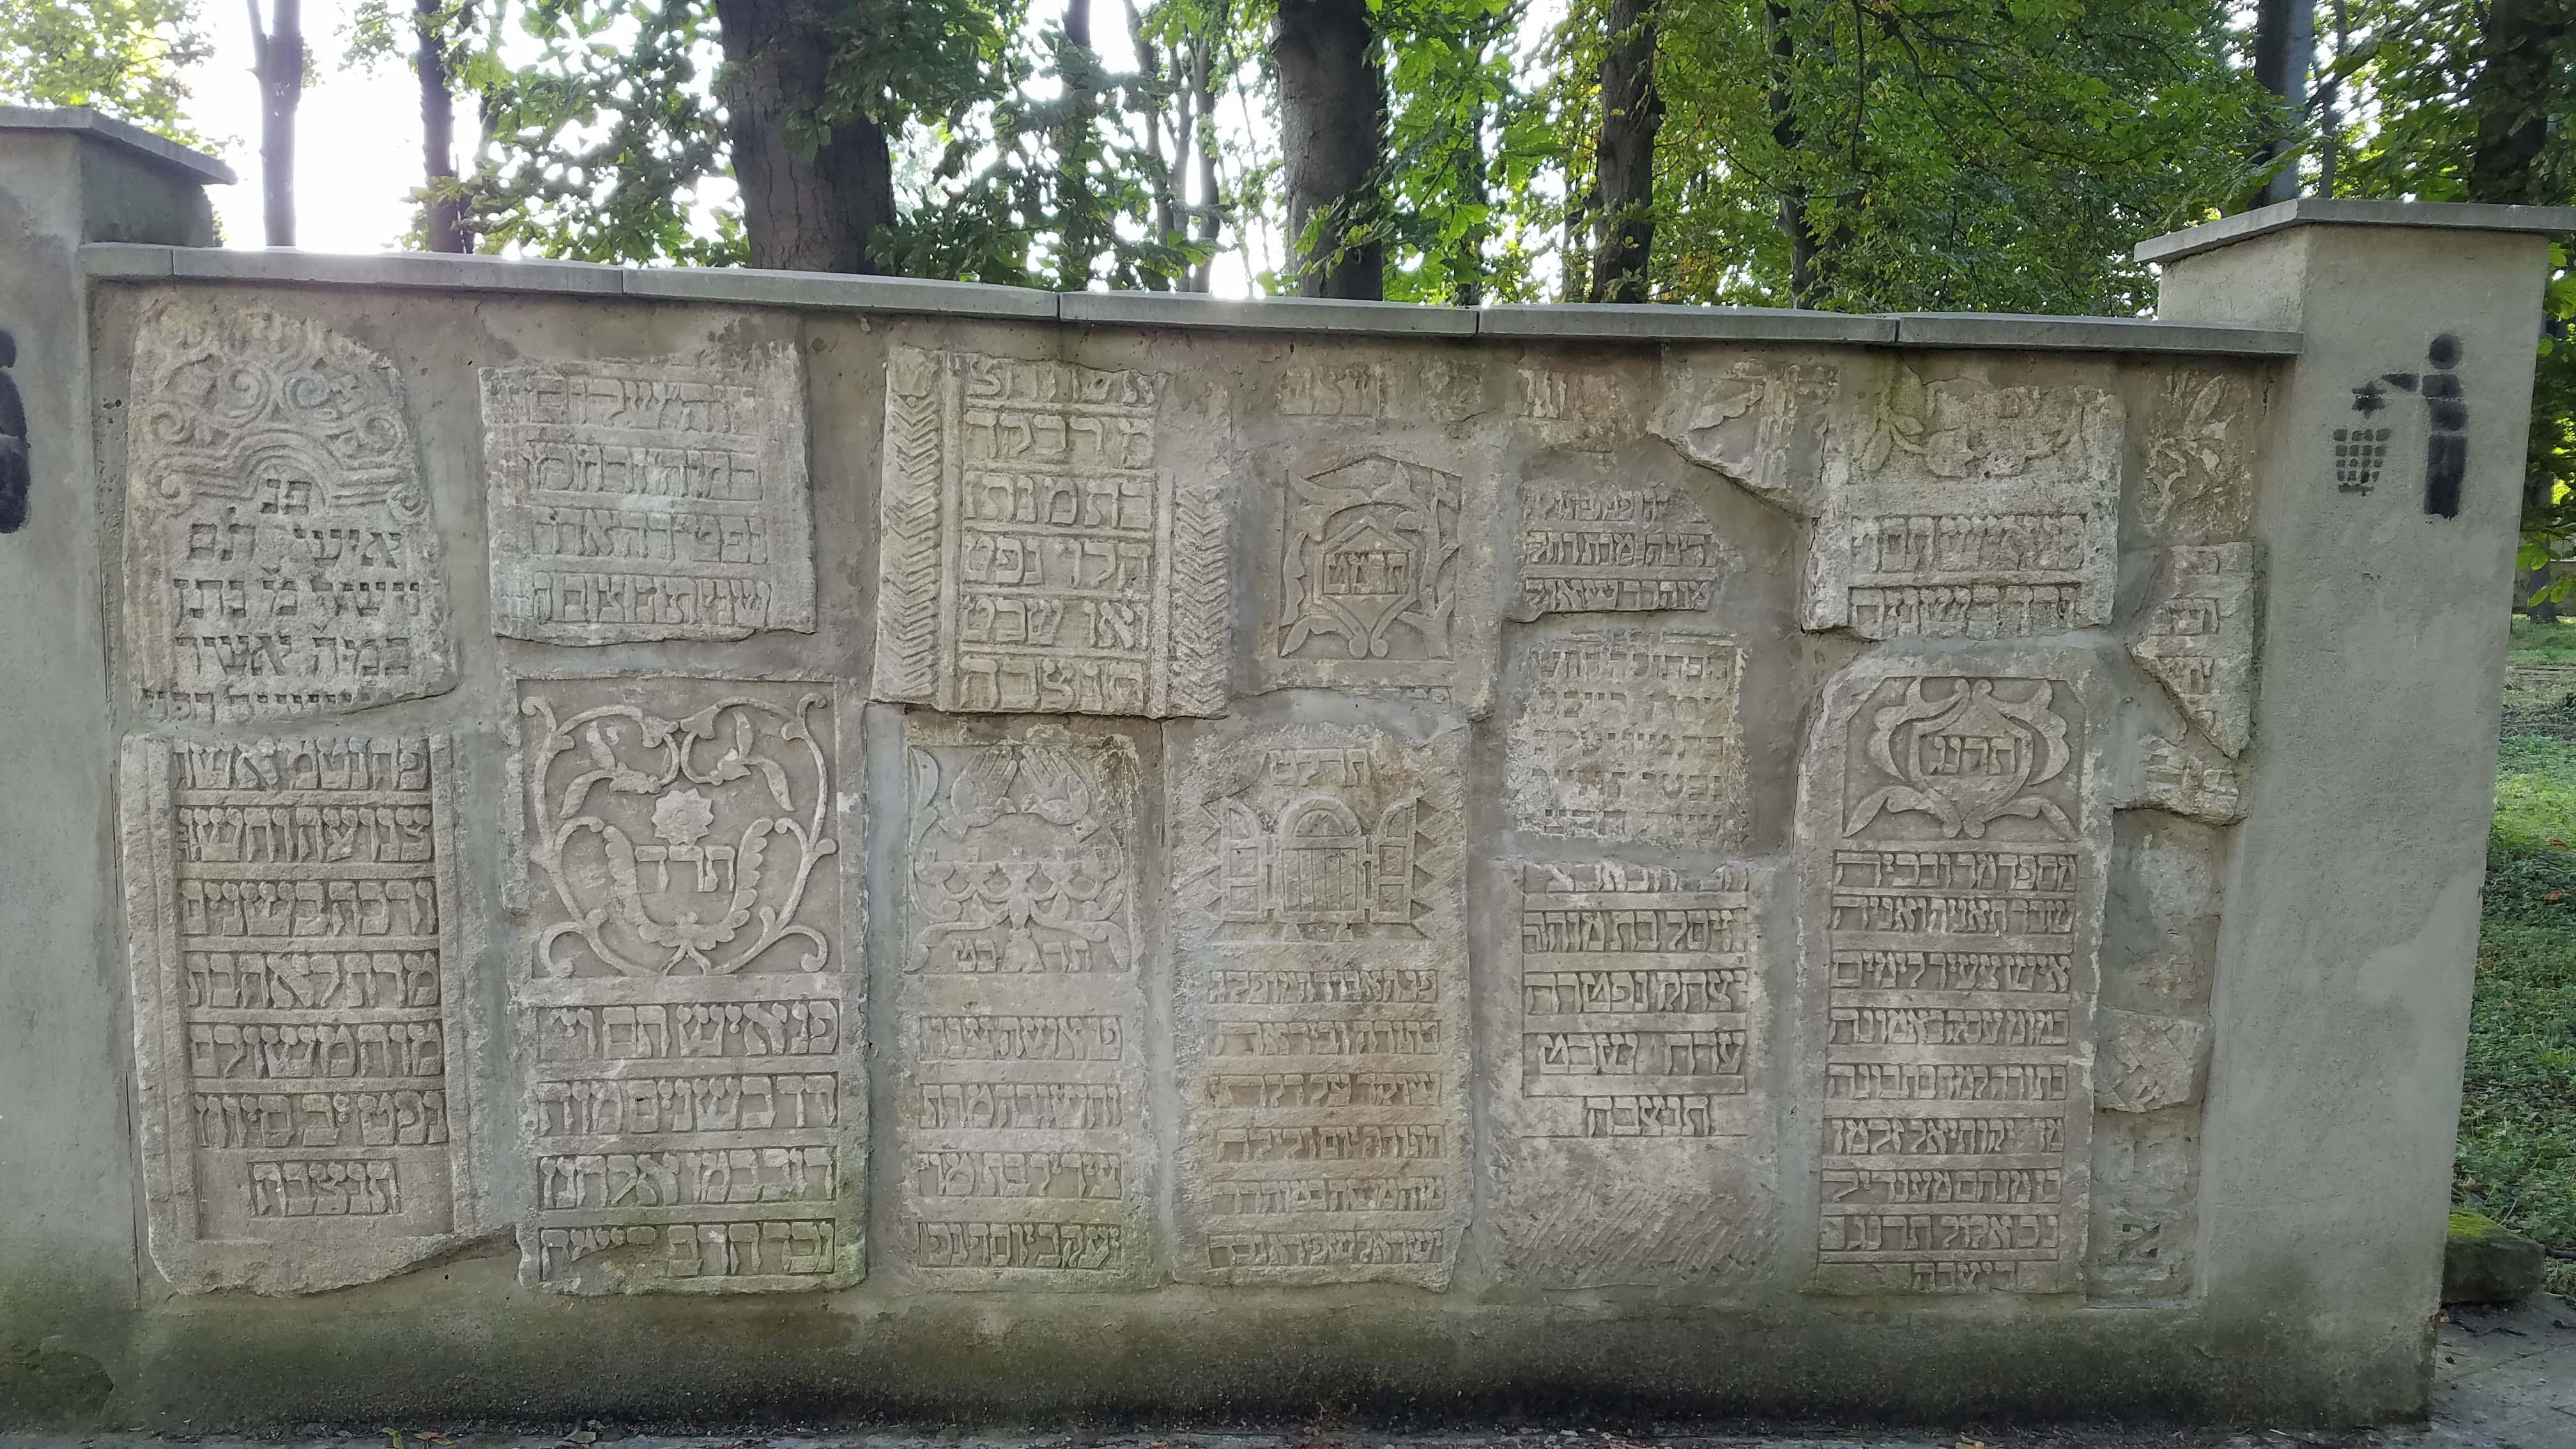 Second memorial wall